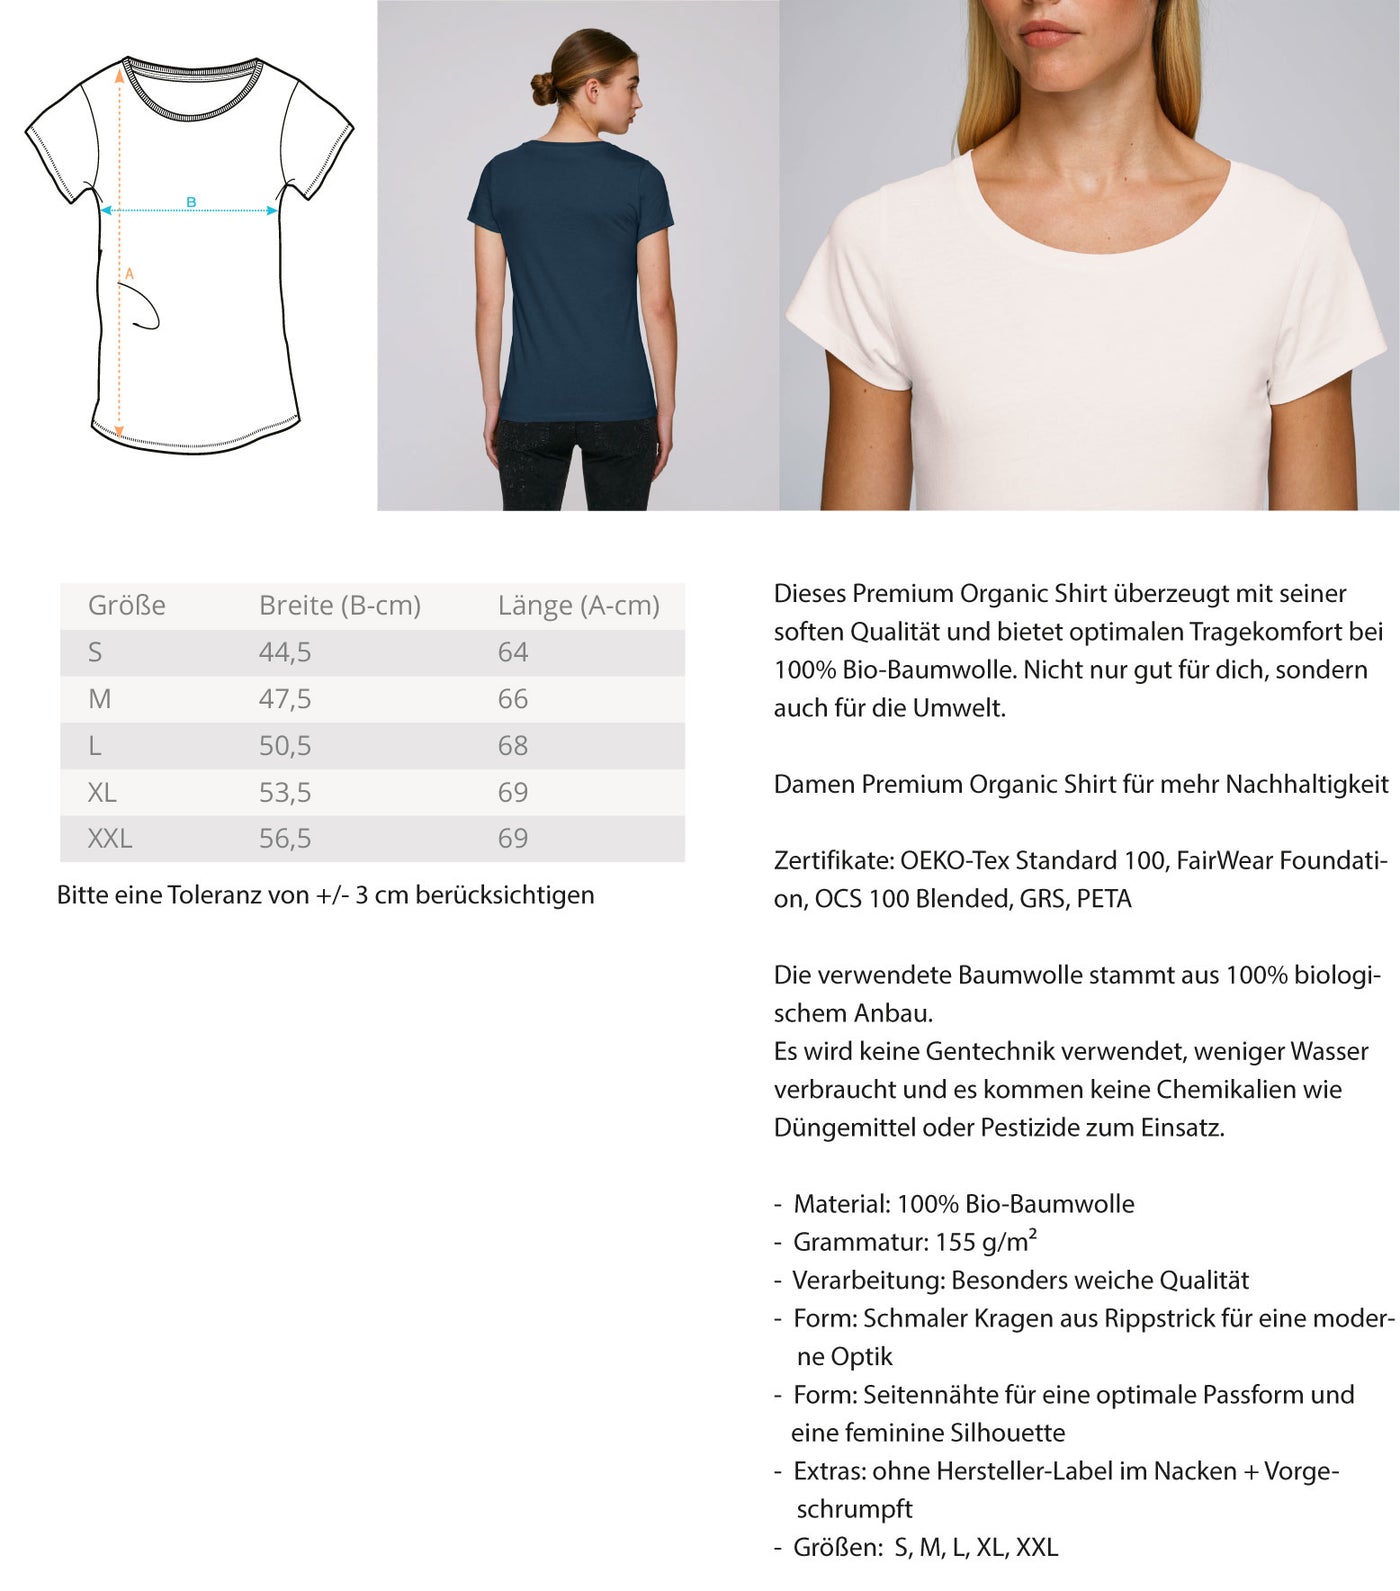 Keep it Simple - Damen Premium Organic T-Shirt fahrrad